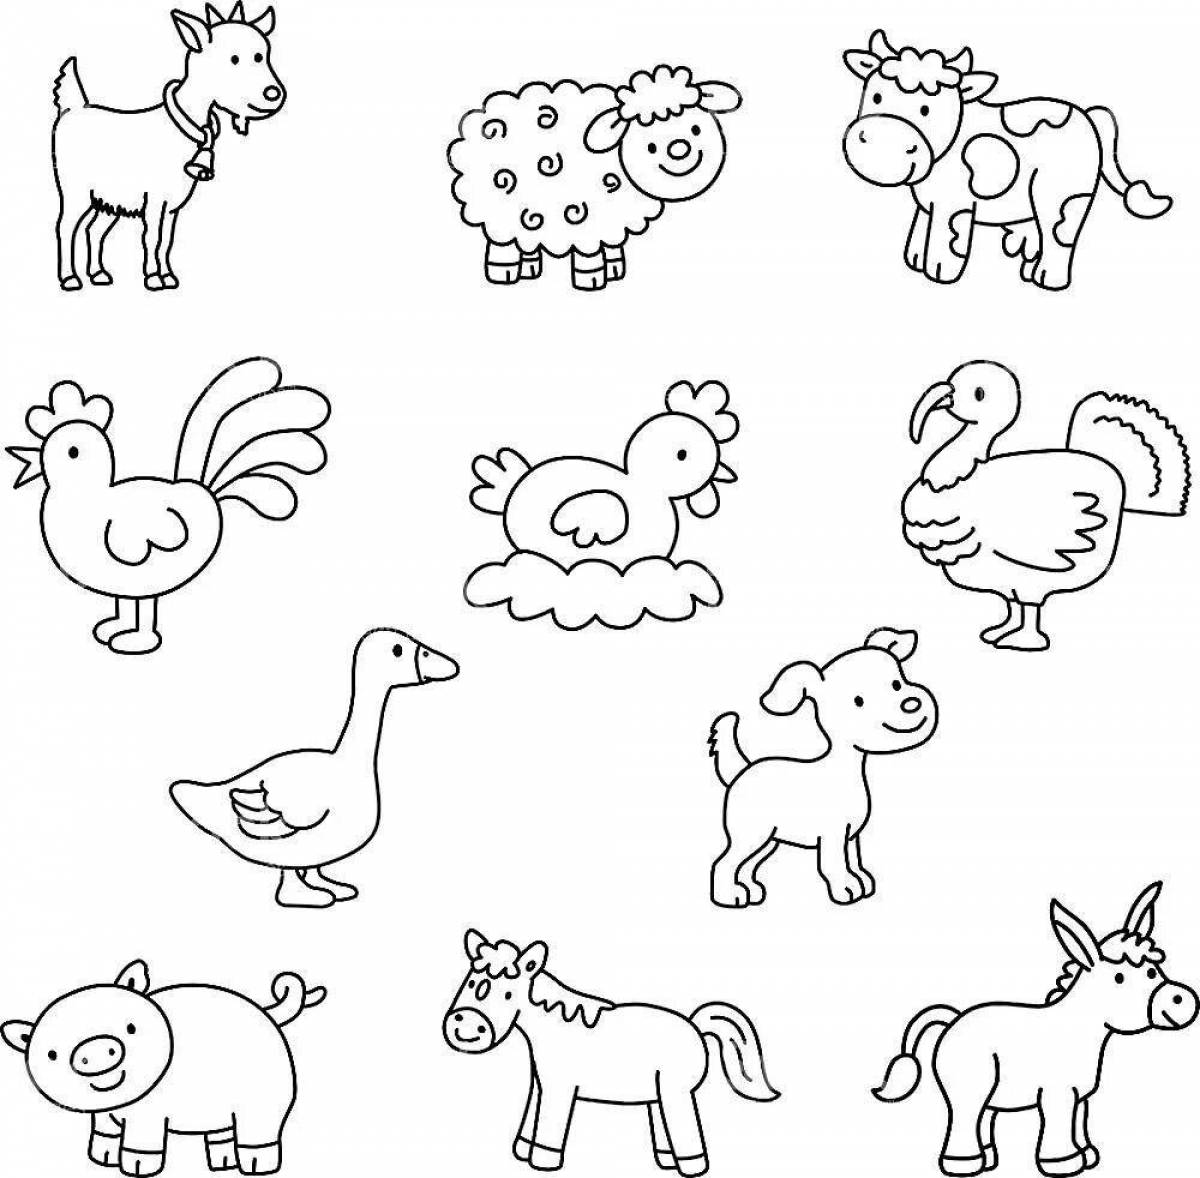 Soft pet coloring pages for preschool children